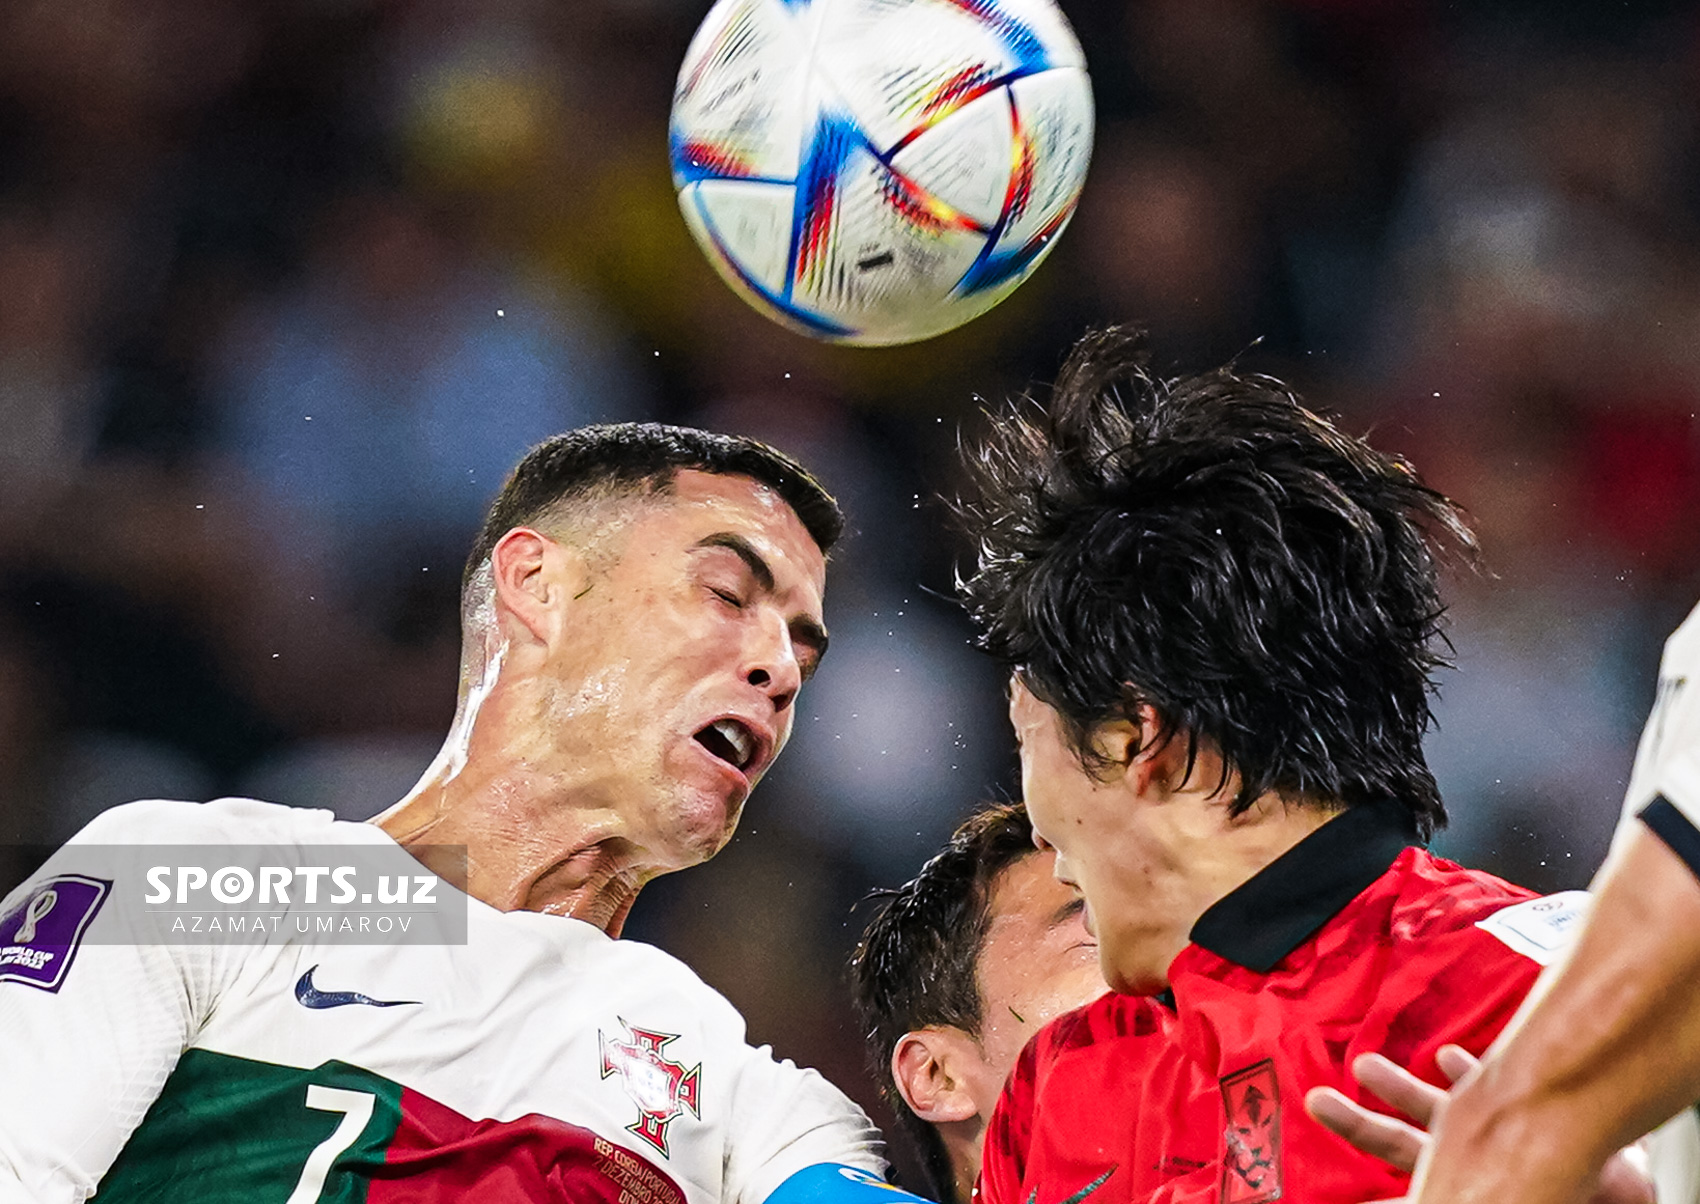 WC Korea Republic vs Portugal